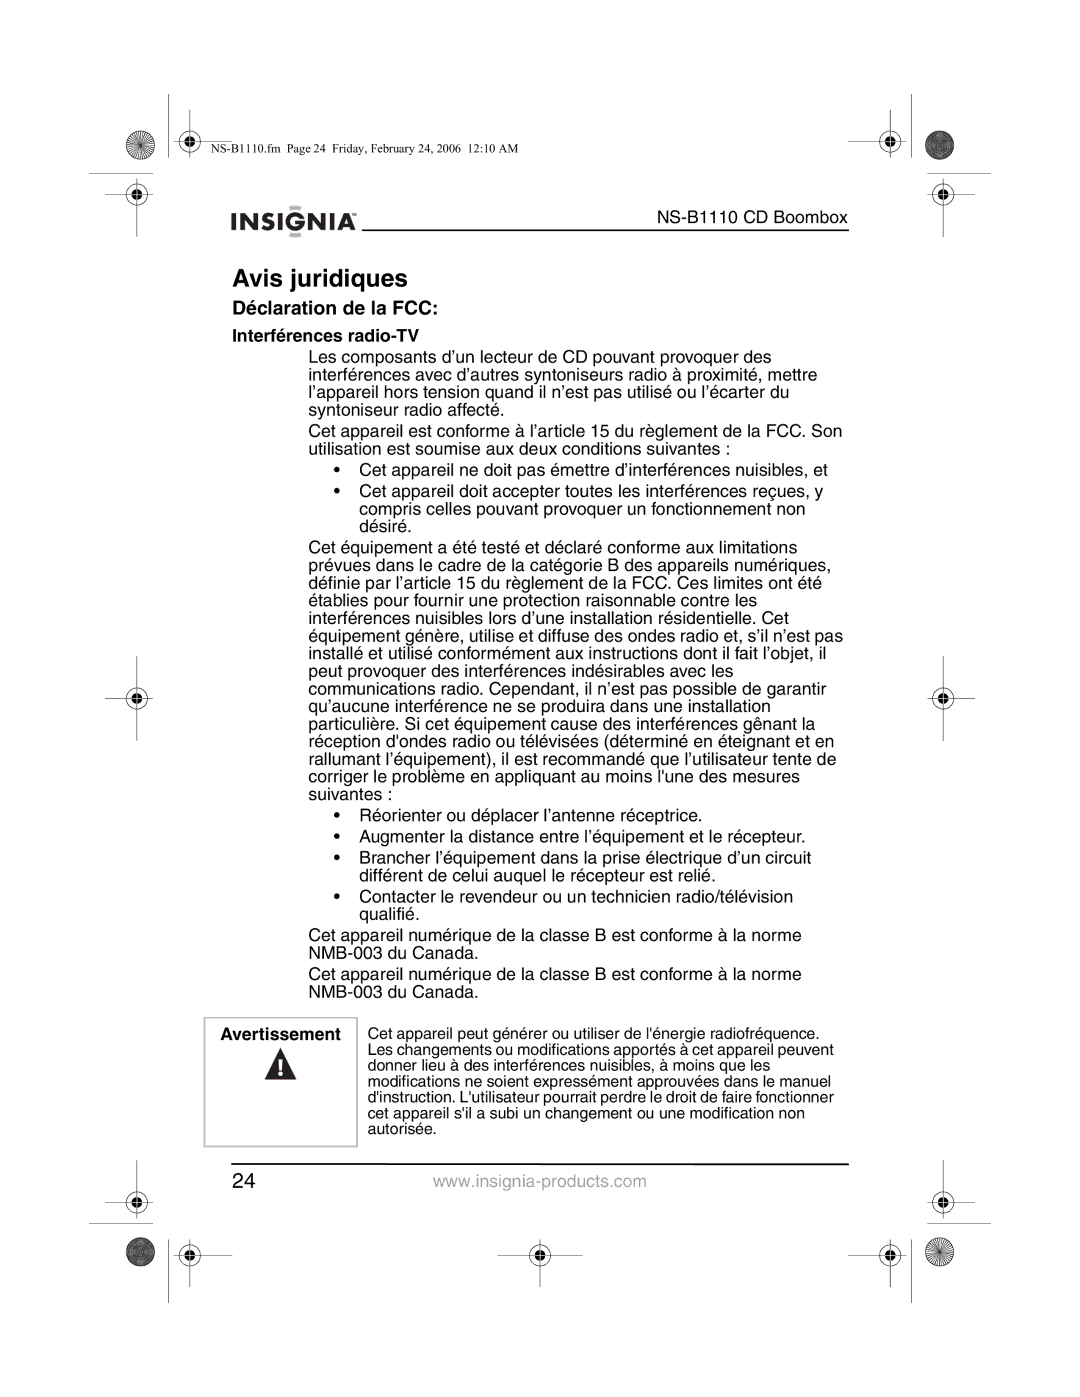 Insignia NS-B1110 manual Avis juridiques, Déclaration de la FCC, Interférences radio-TV, Avertissement 